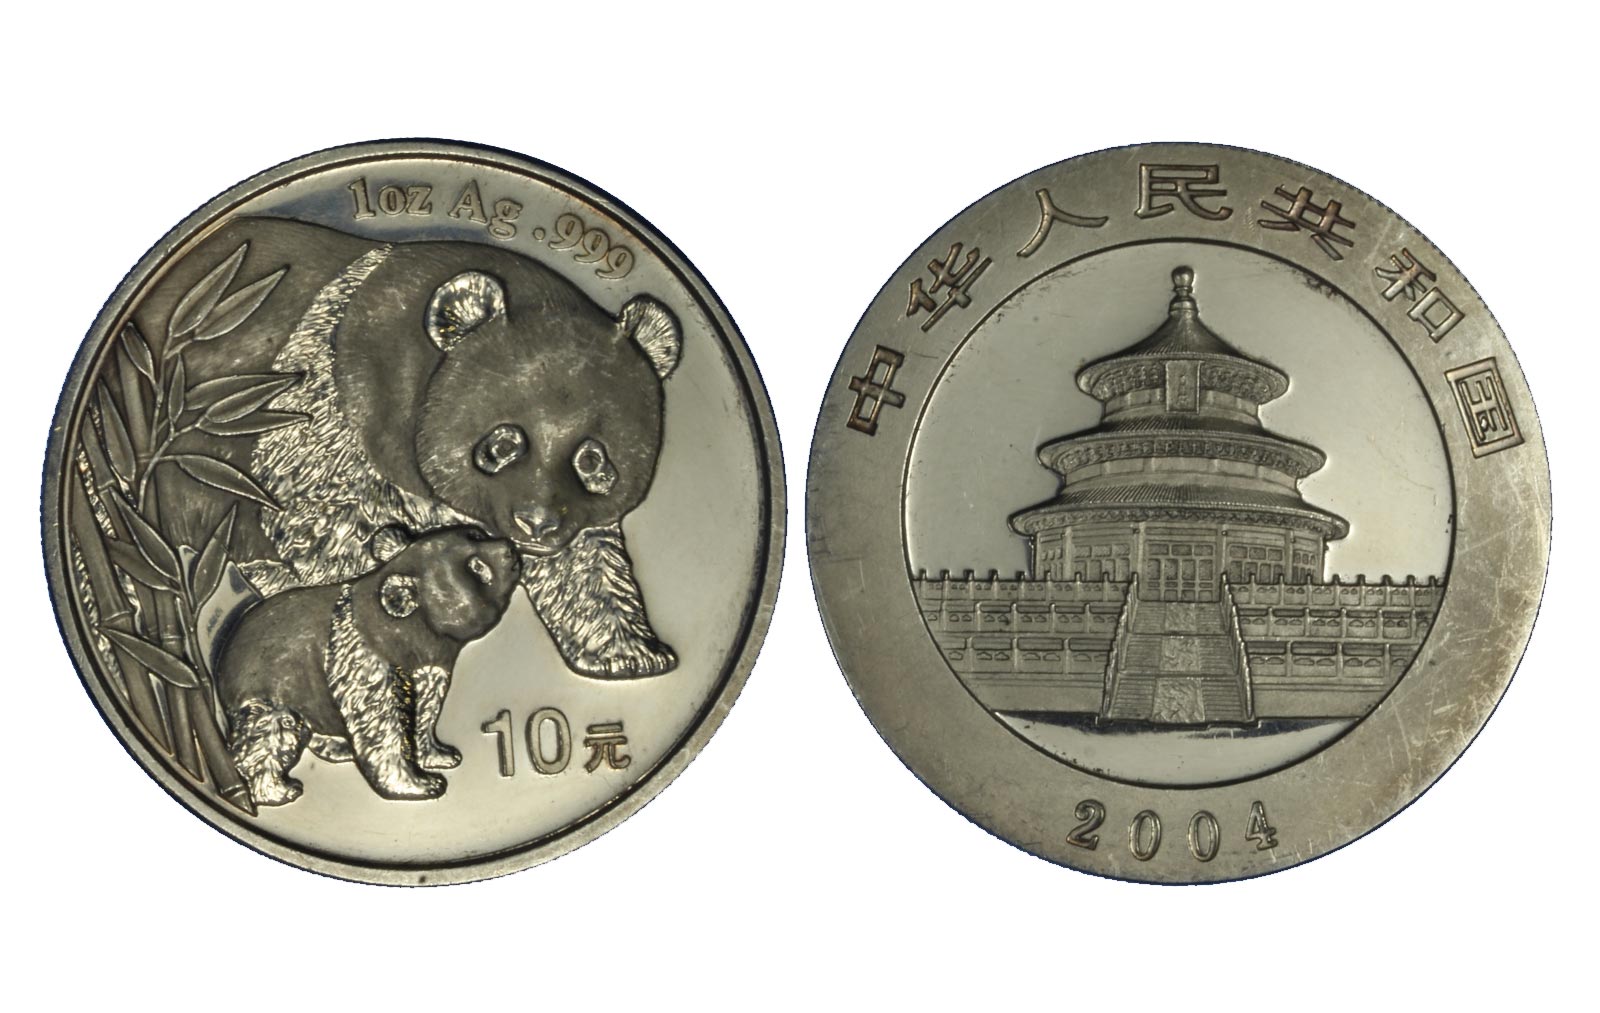  "Panda" - moneta da 10 Yuan gr. 31,103 (1 oz) in argento 999/°°°